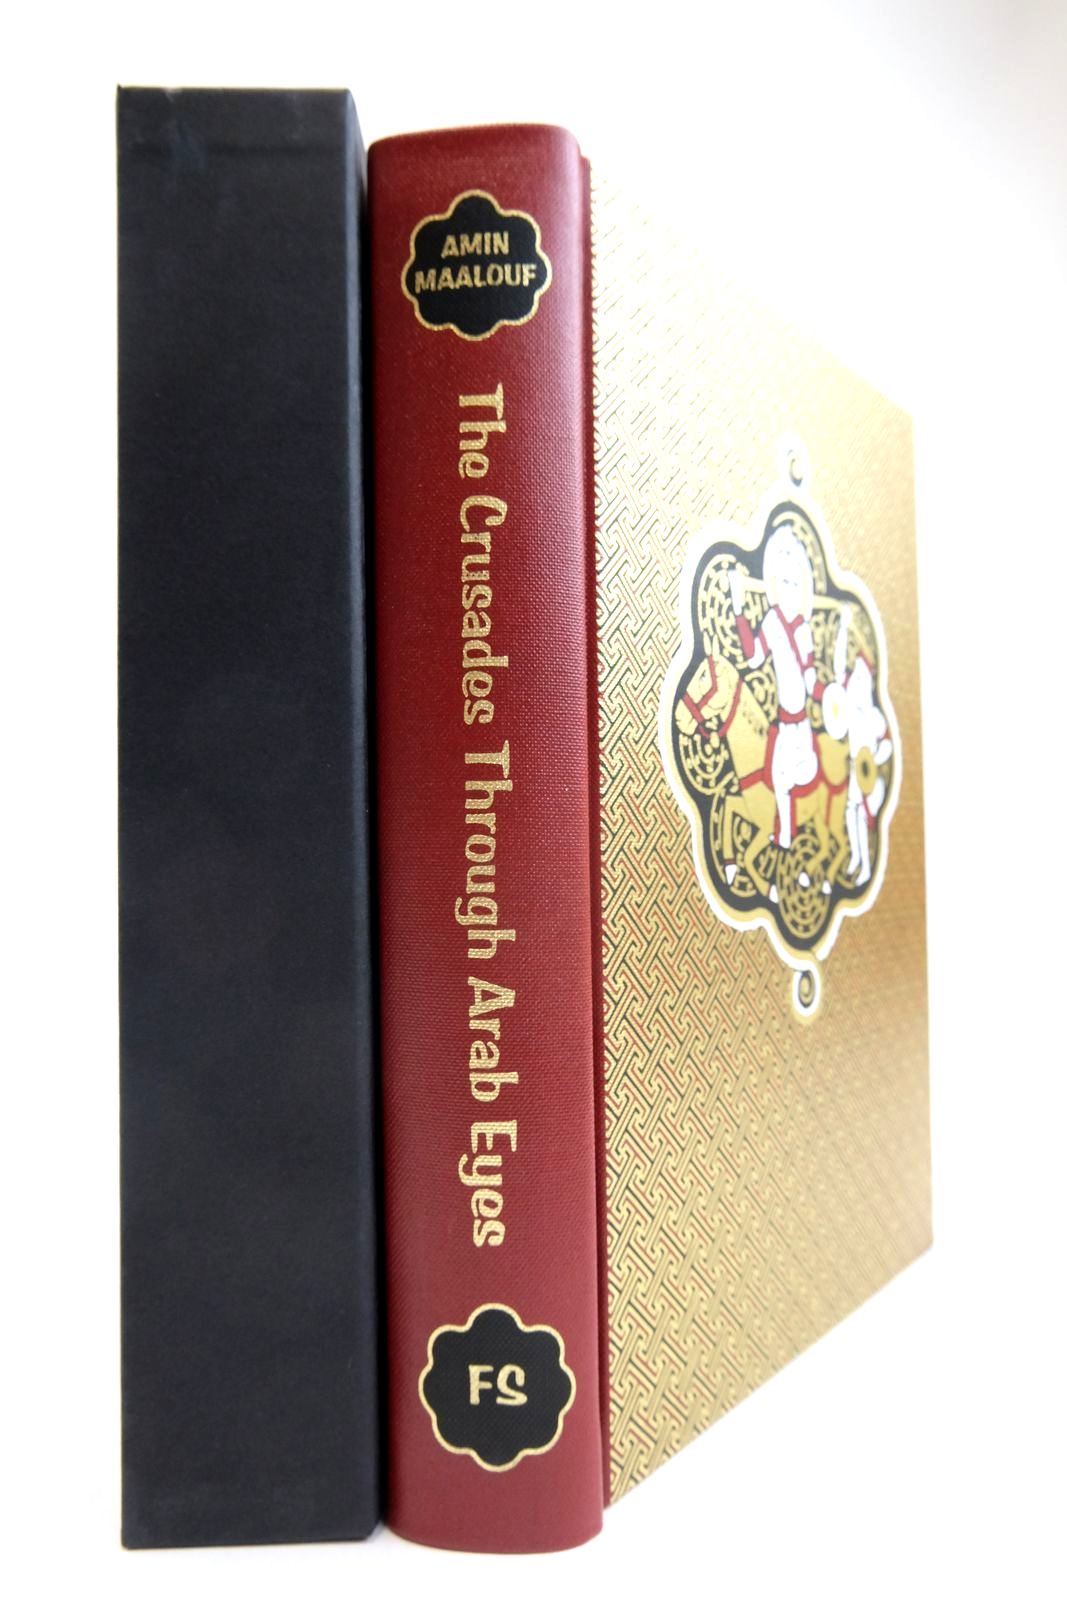 stella-rose-s-books-the-crusades-through-arab-eyes-written-by-amin-maalouf-jon-rothschild